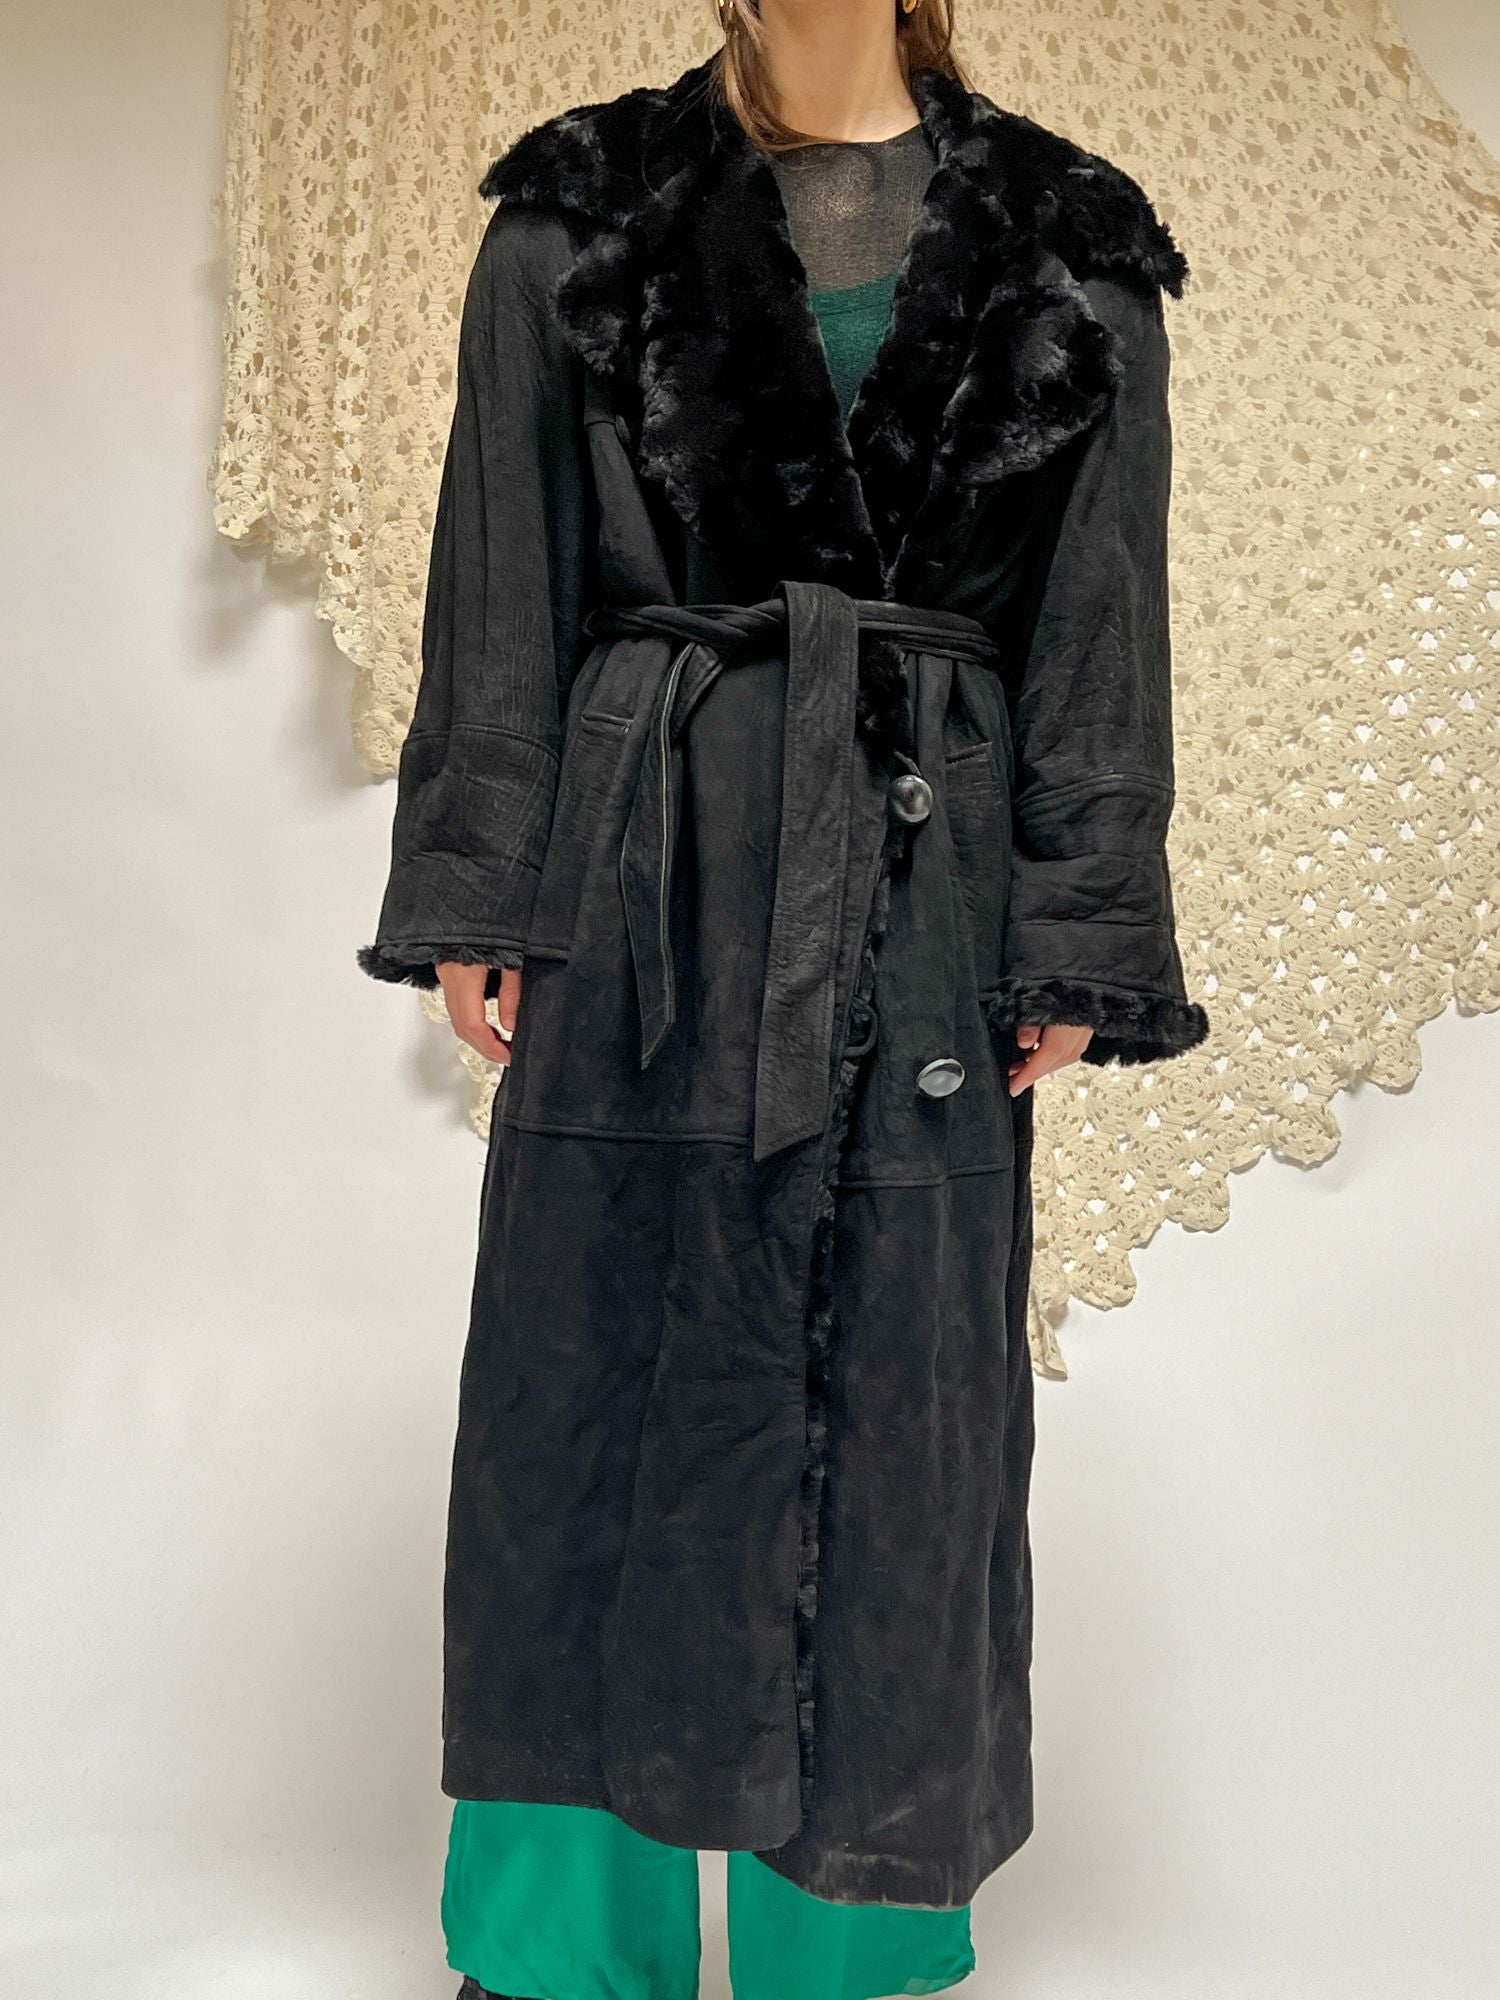 Bally Leather + Faux Fur Coat (M) - 2